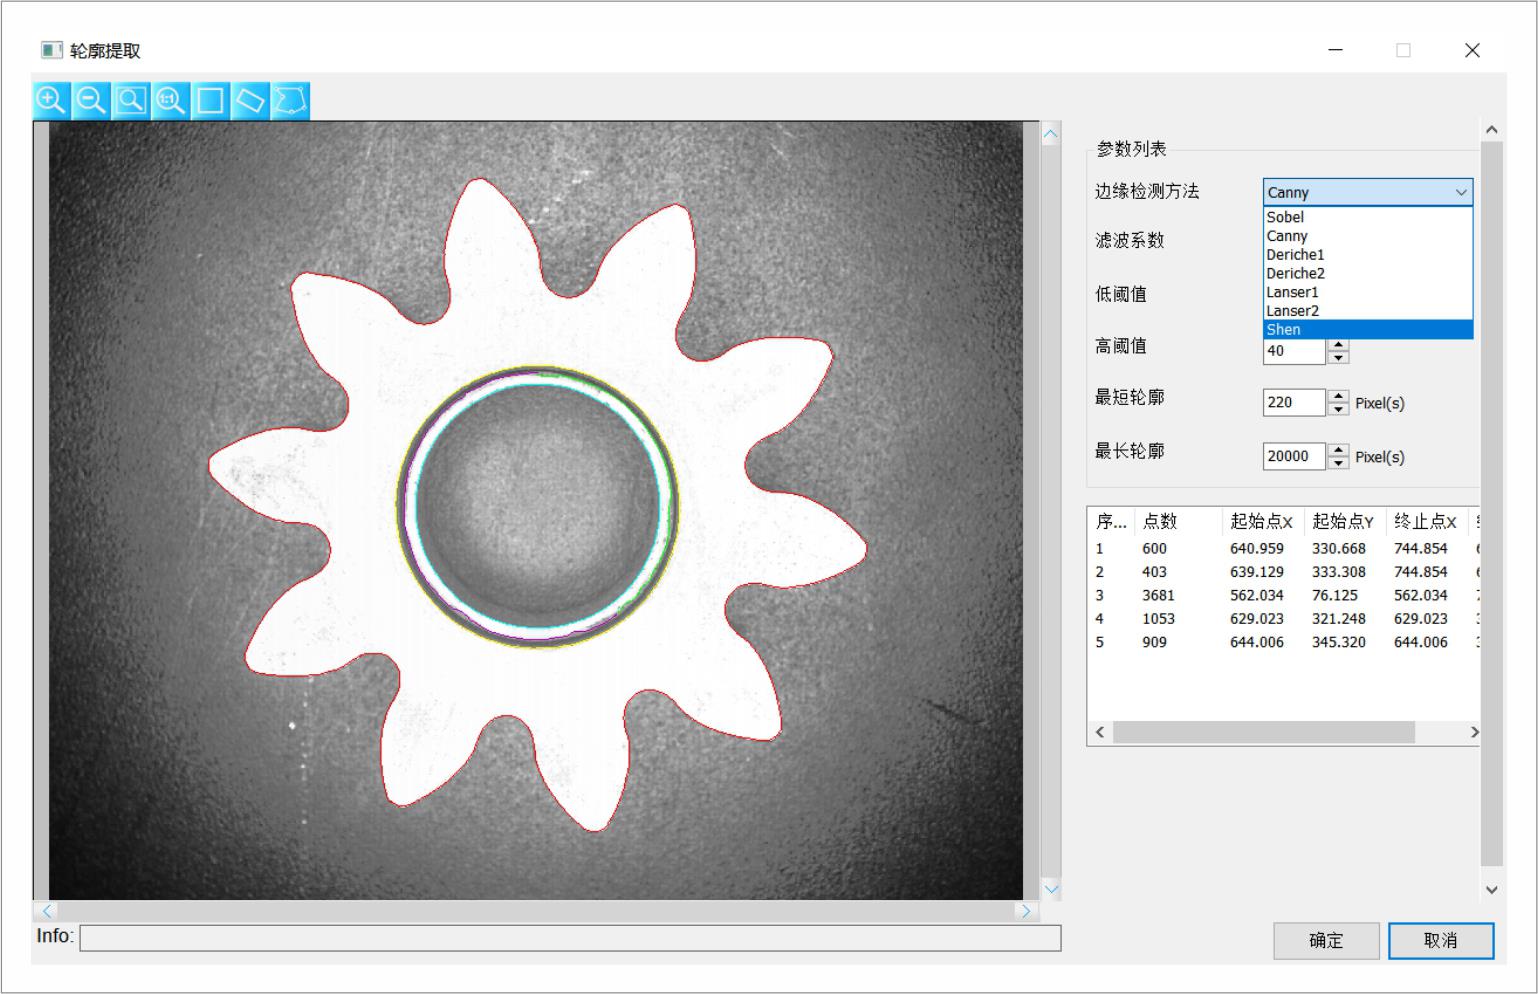 OPT小讲堂 ∣ SciSmart图像检测之轮廓提取和轮廓操作